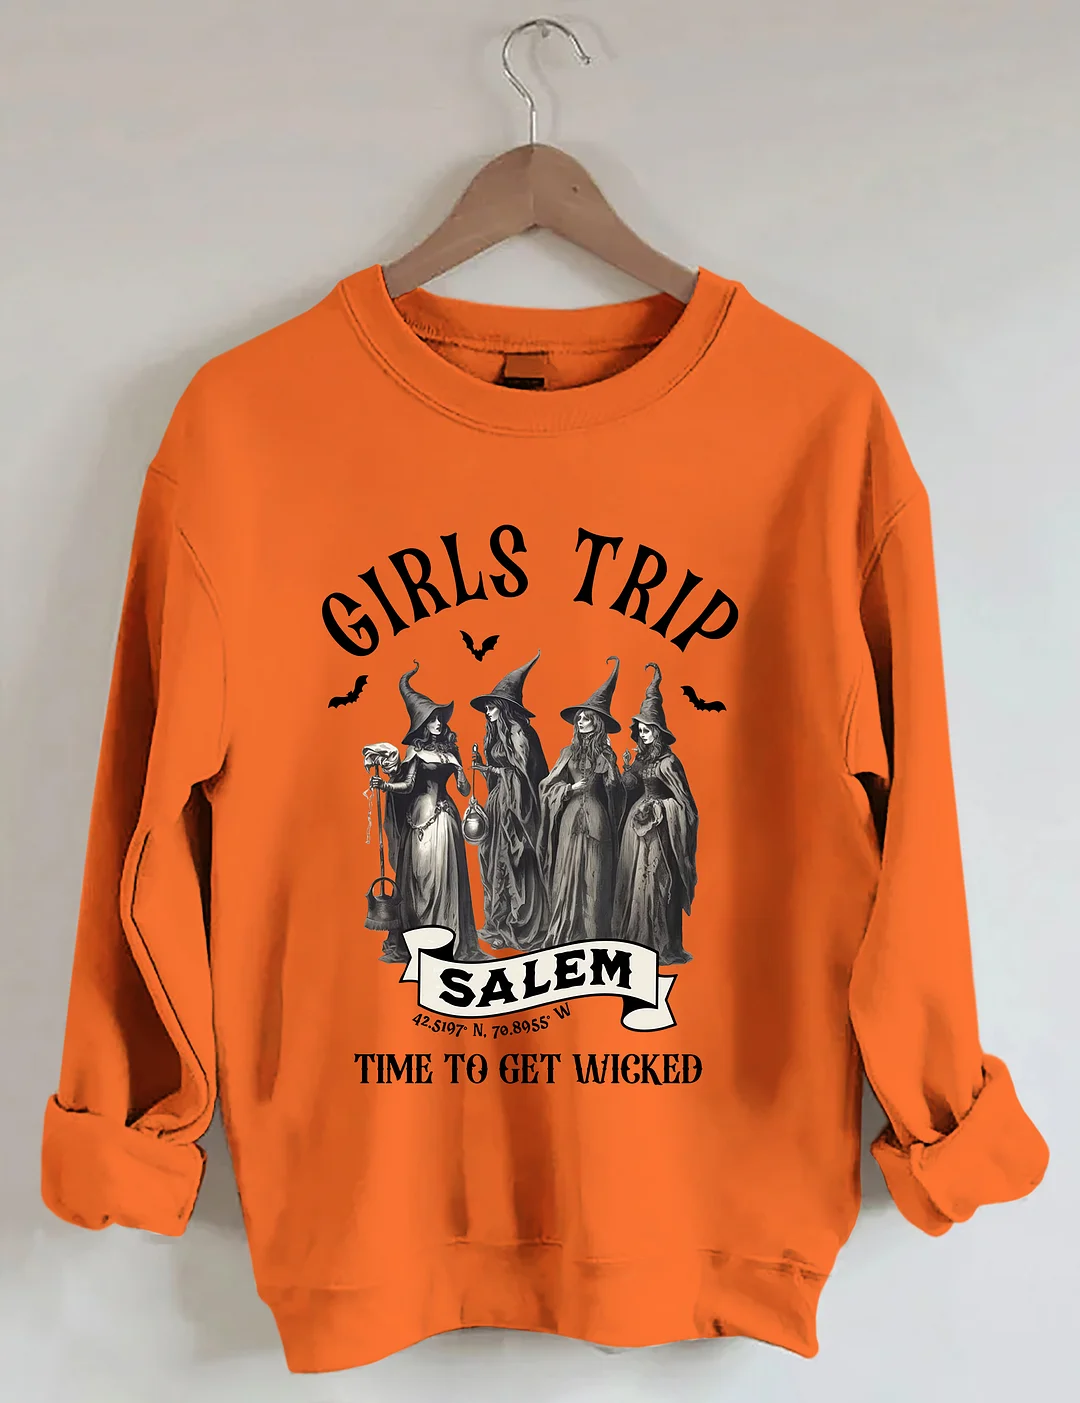 Girls Trip Salem Massachusetts Sweatshirt